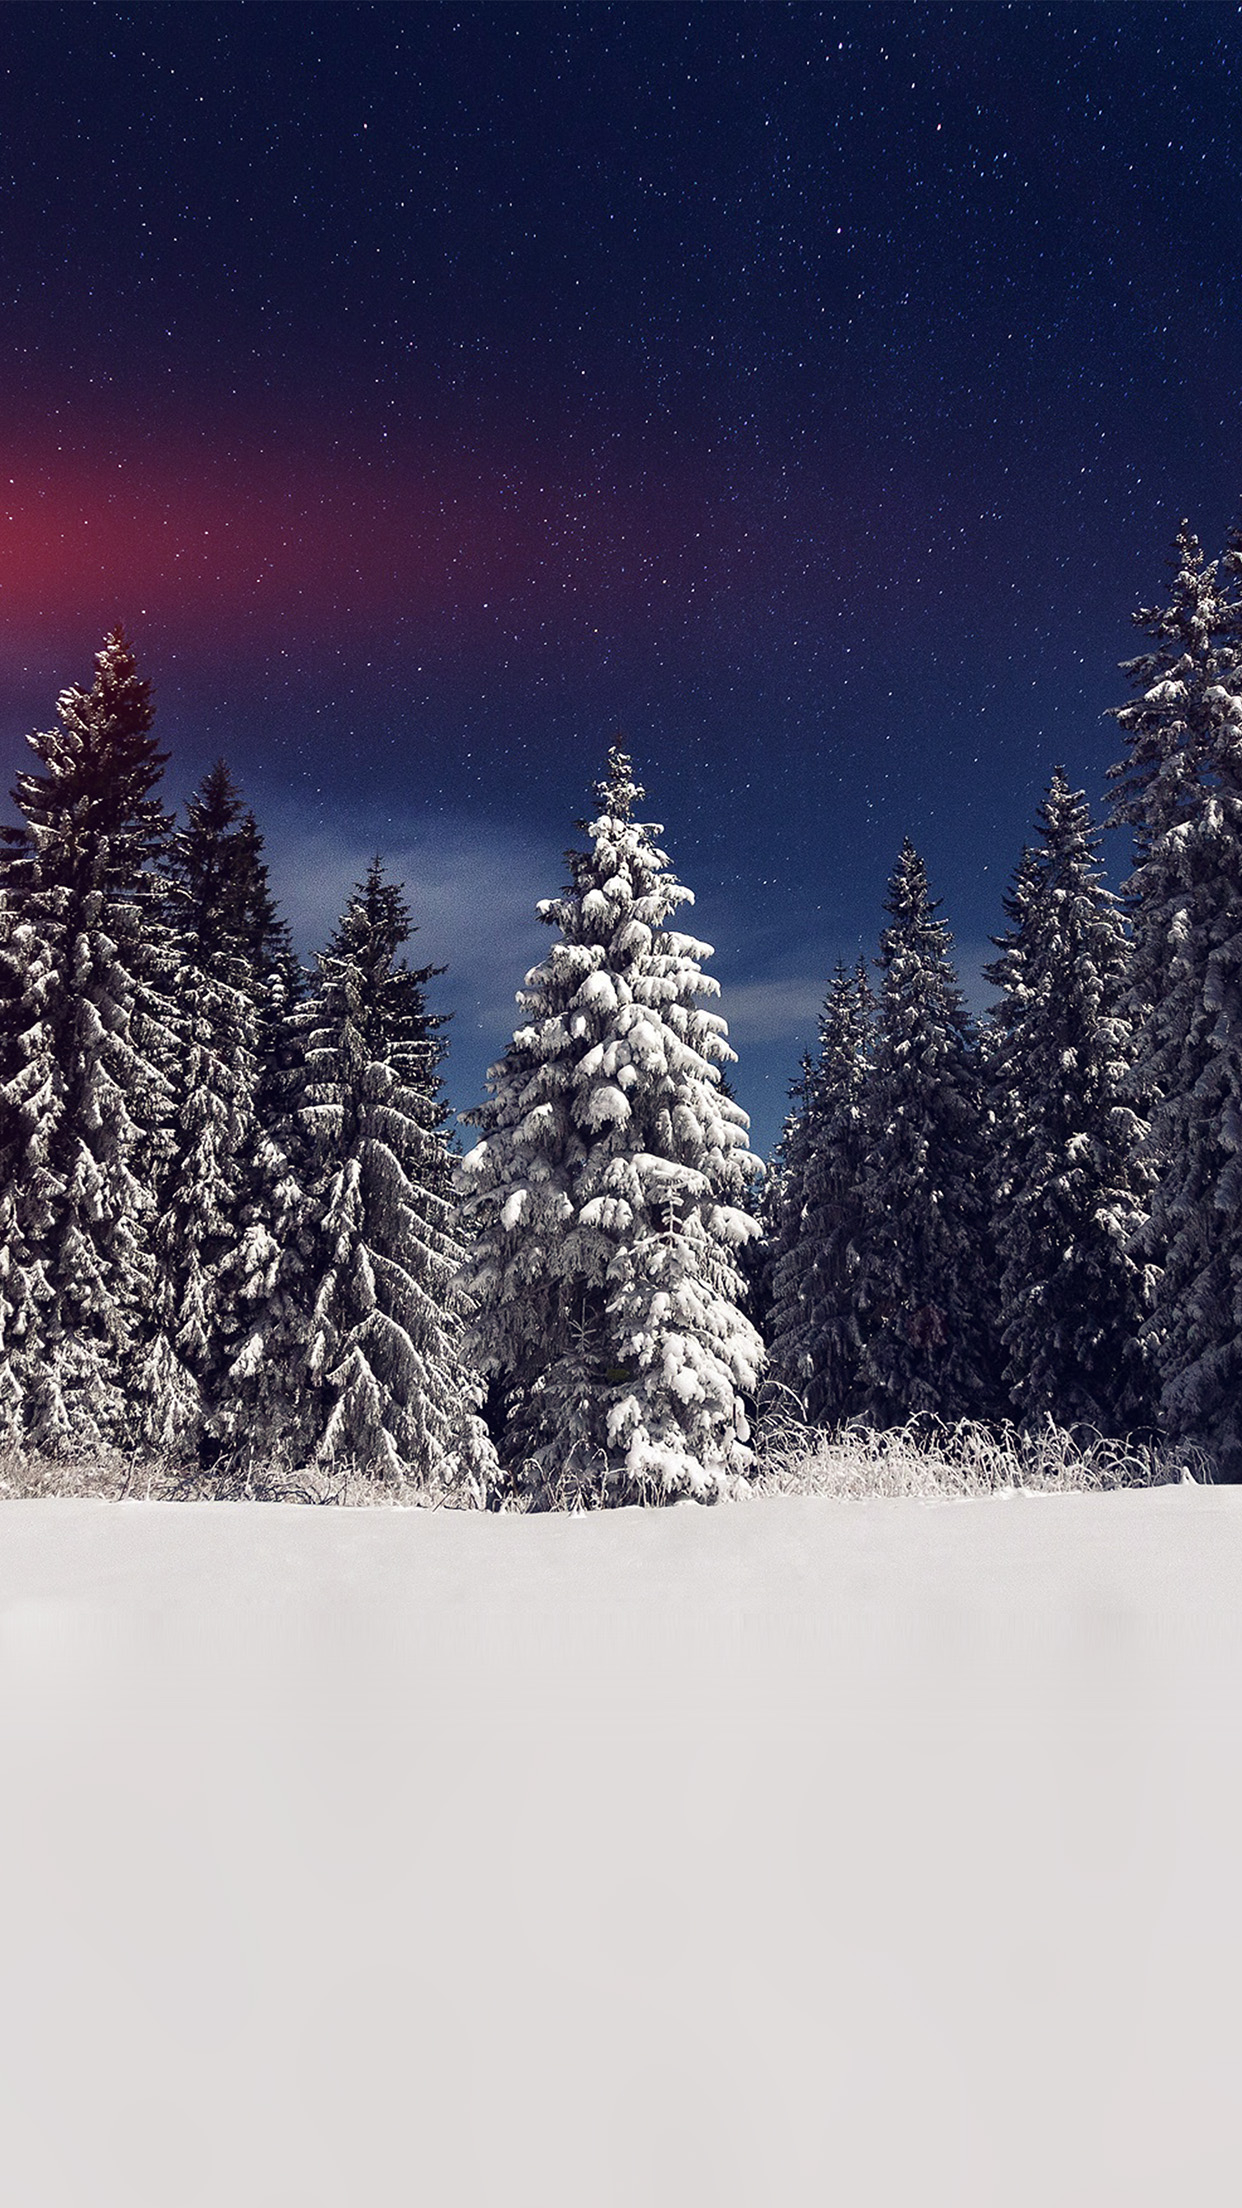 1242x2208 | iPhone X wallpaper | mz24-snow-winter-woodmountain-sky-star-night-flare